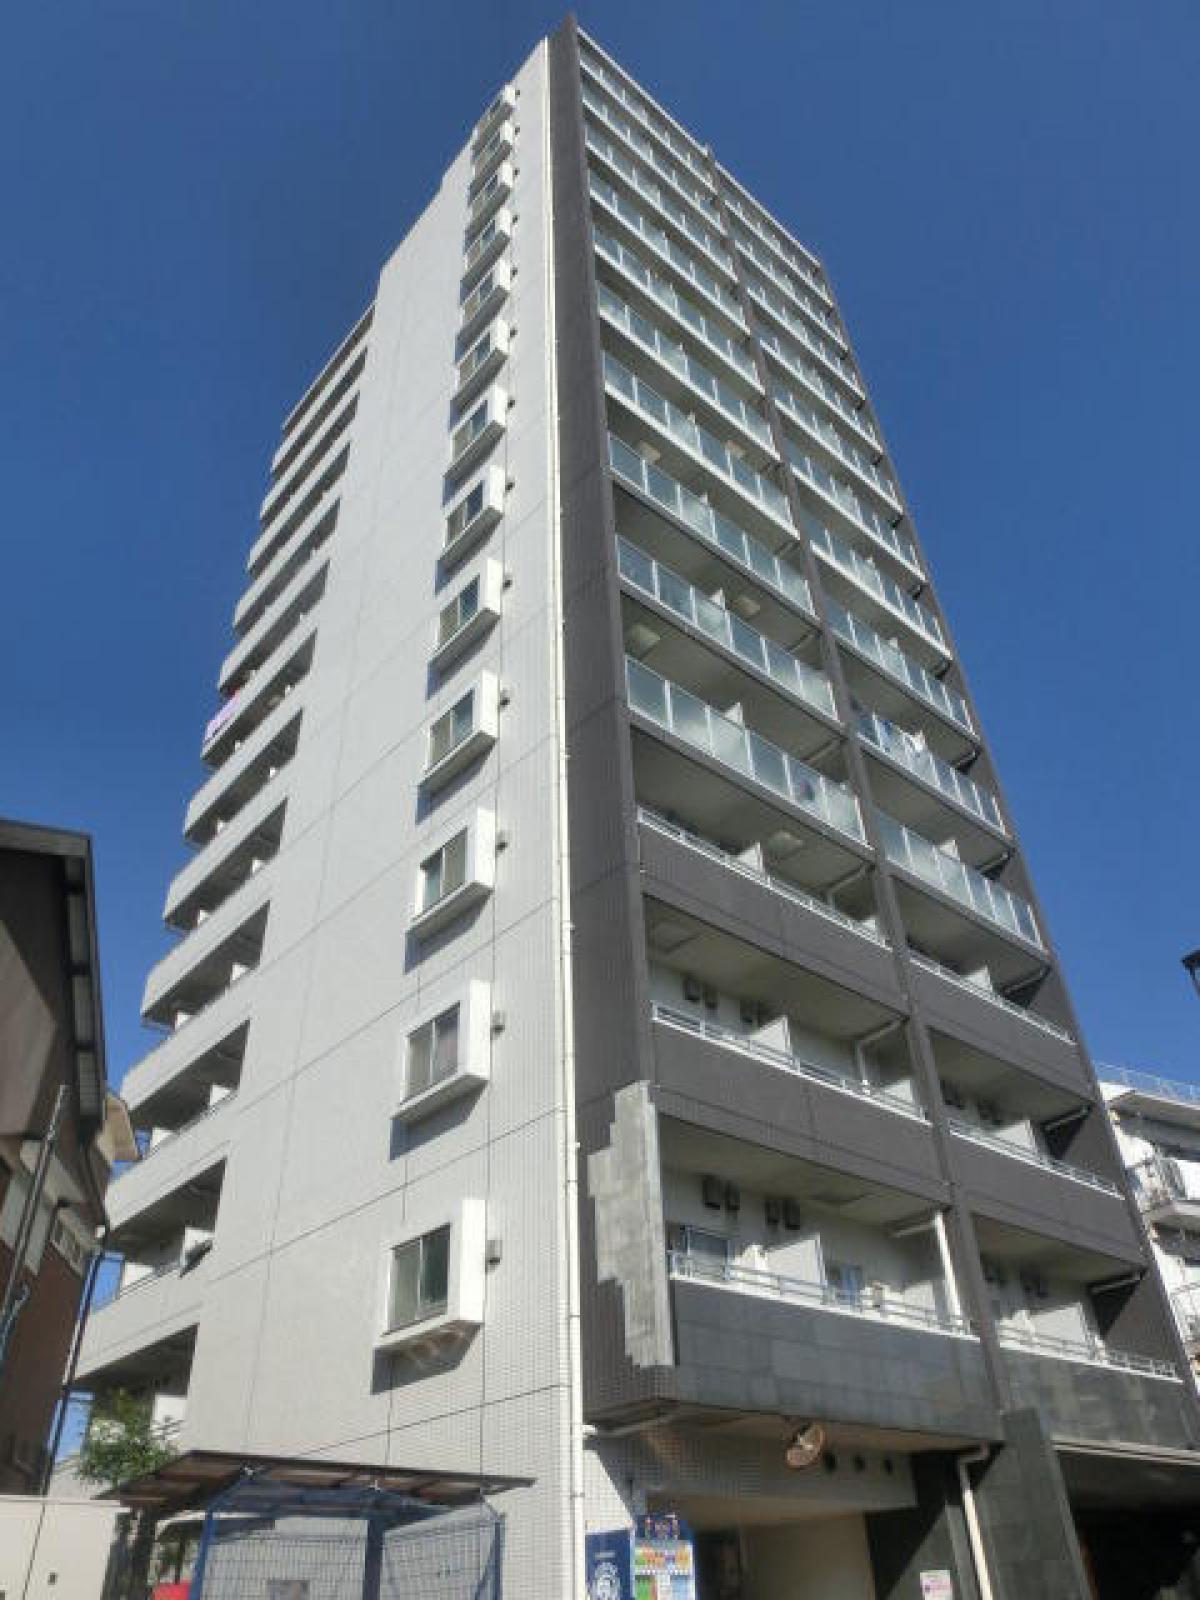 Picture of Apartment For Sale in Katsushika Ku, Tokyo, Japan